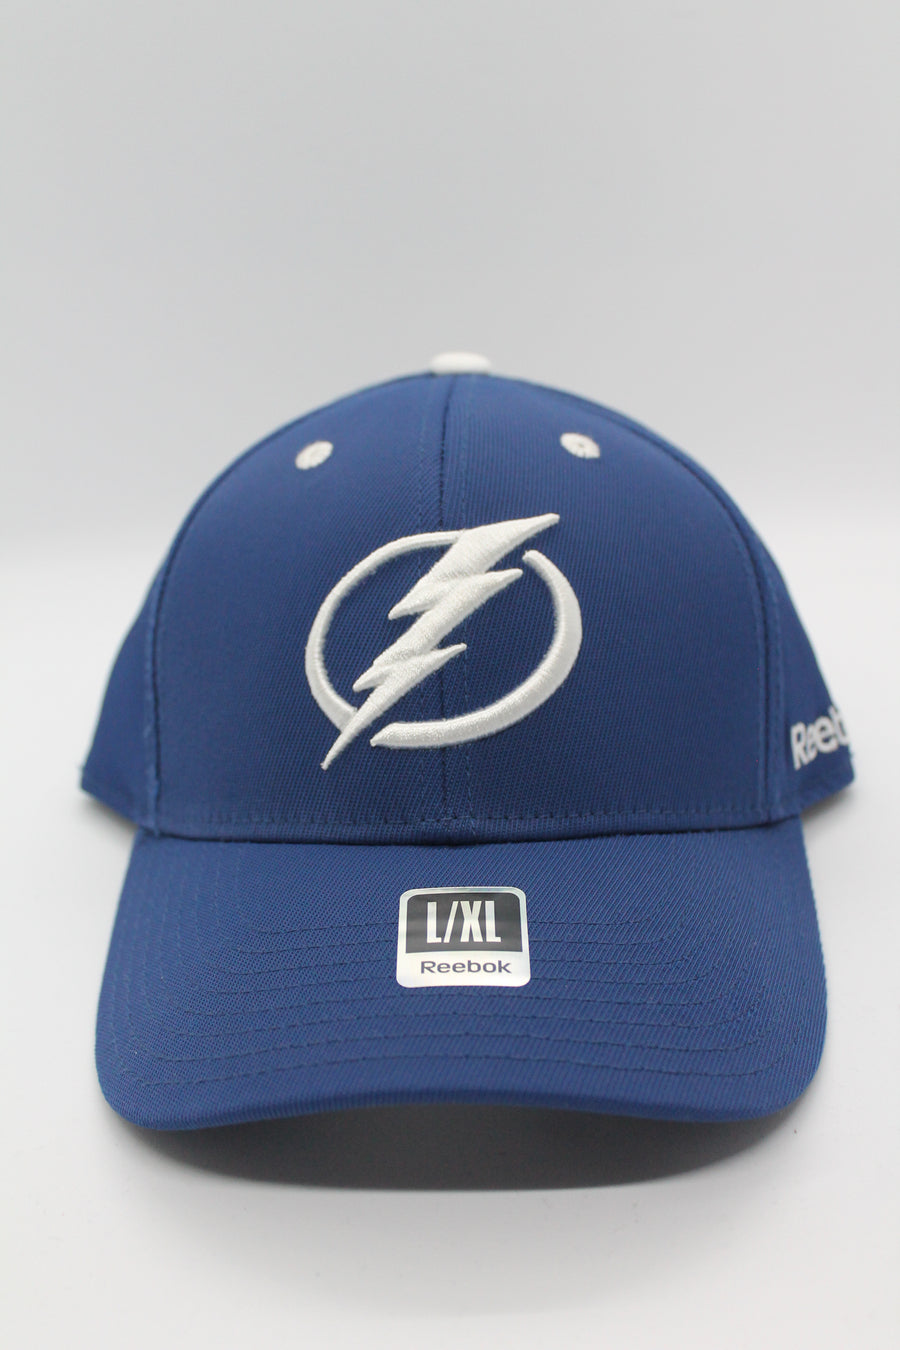 NHL Tampa Bay Lightning Reebok Flex Hat